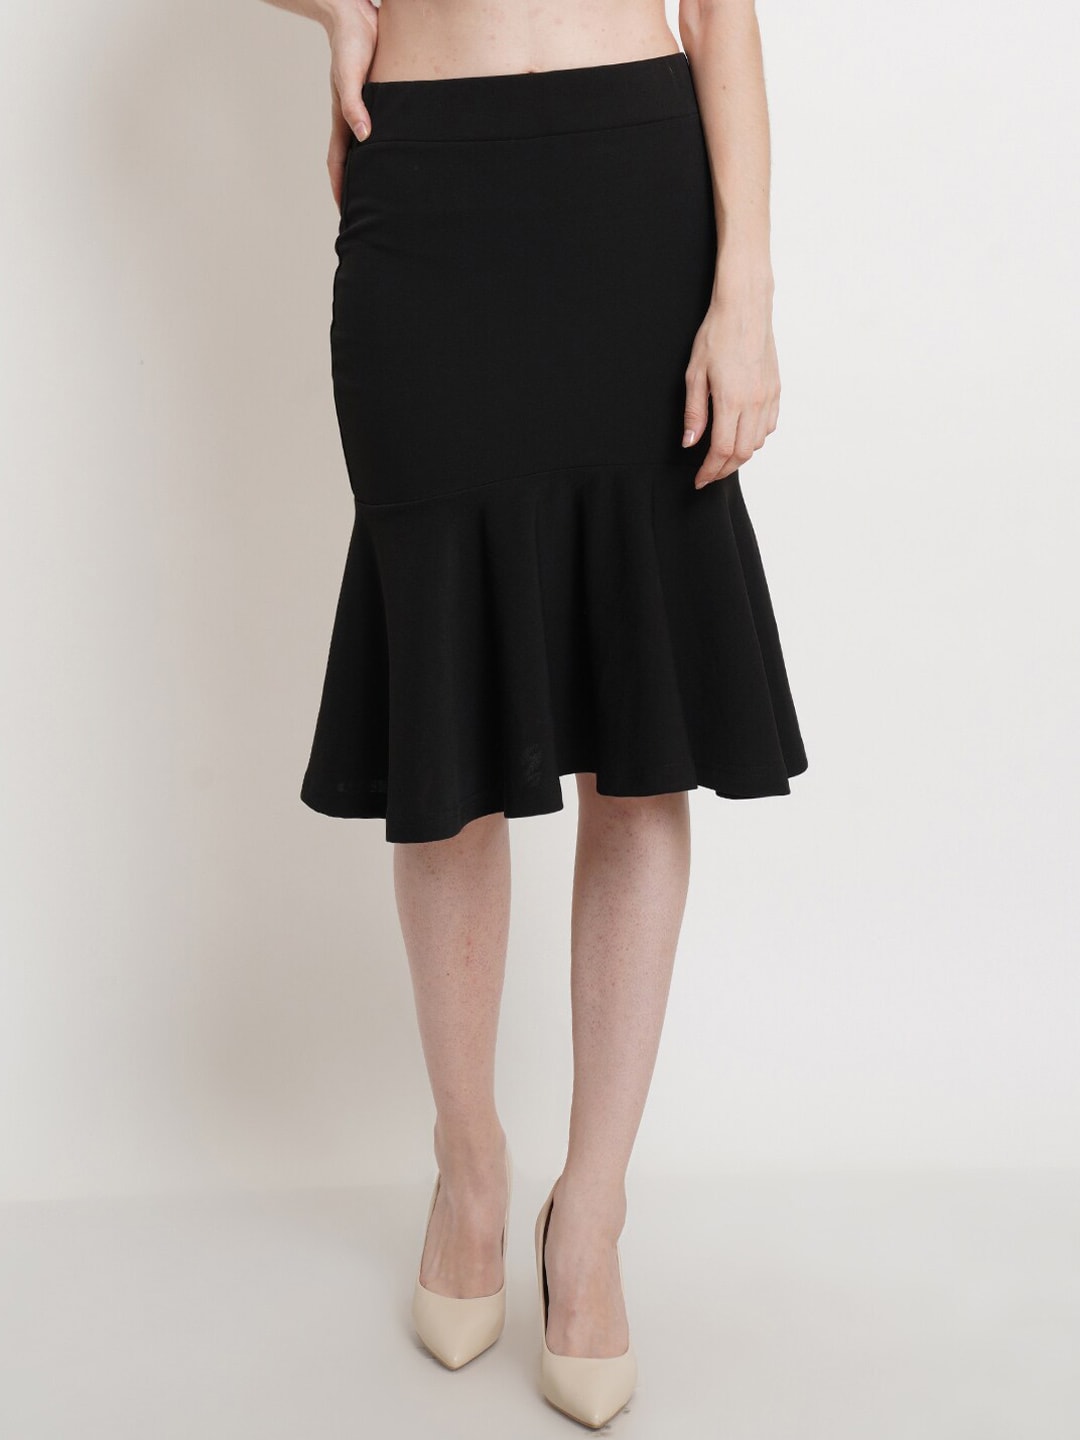 Popwings Women Black Solid Knee Length Peplum Skirts Price in India